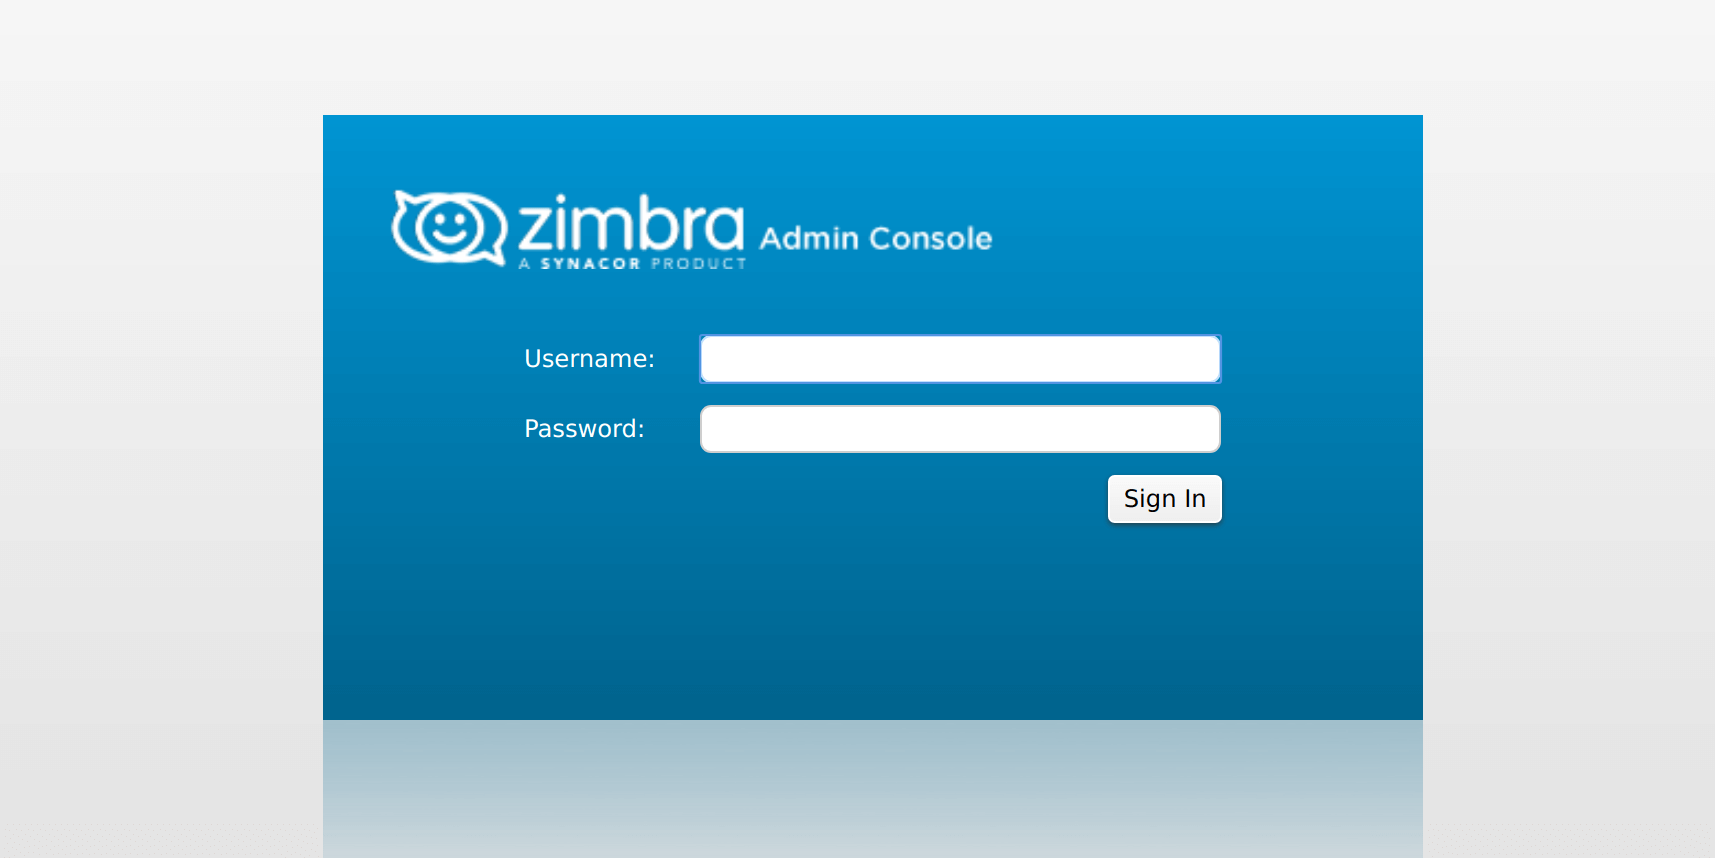 Deploy Zimbra Collaboration using docker